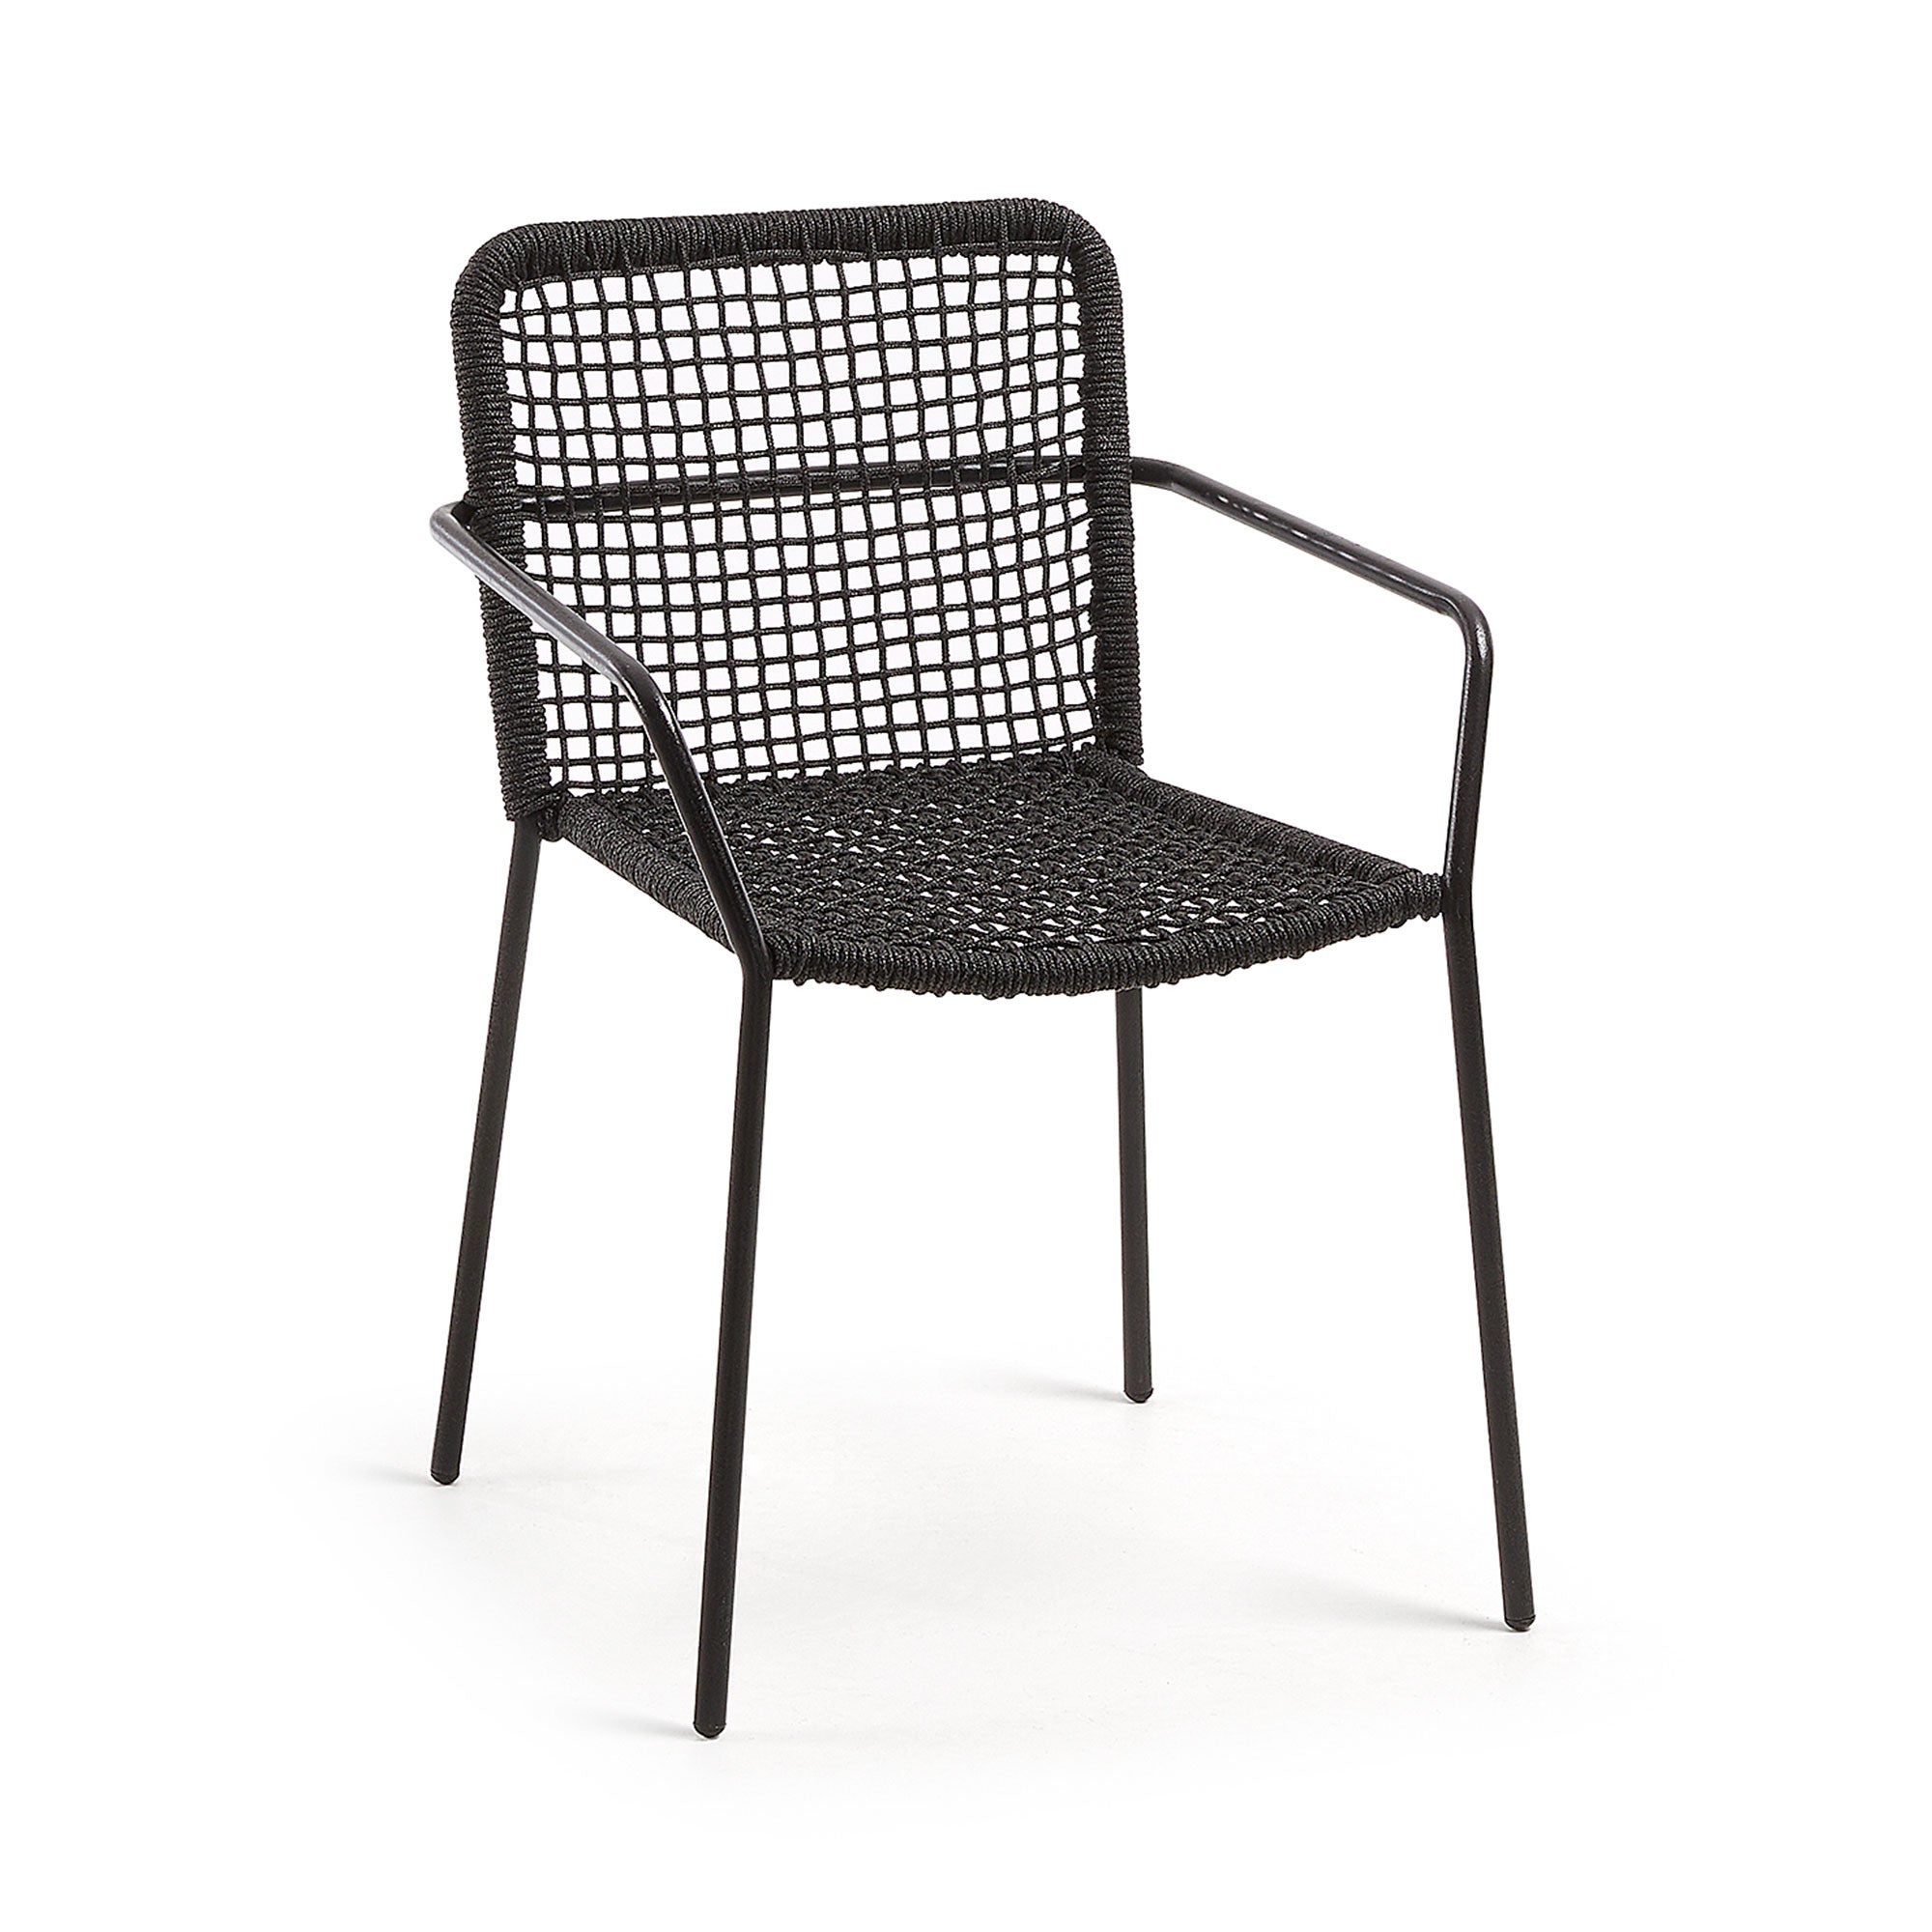 Ellen stackable chair in black cord with galvanised steel